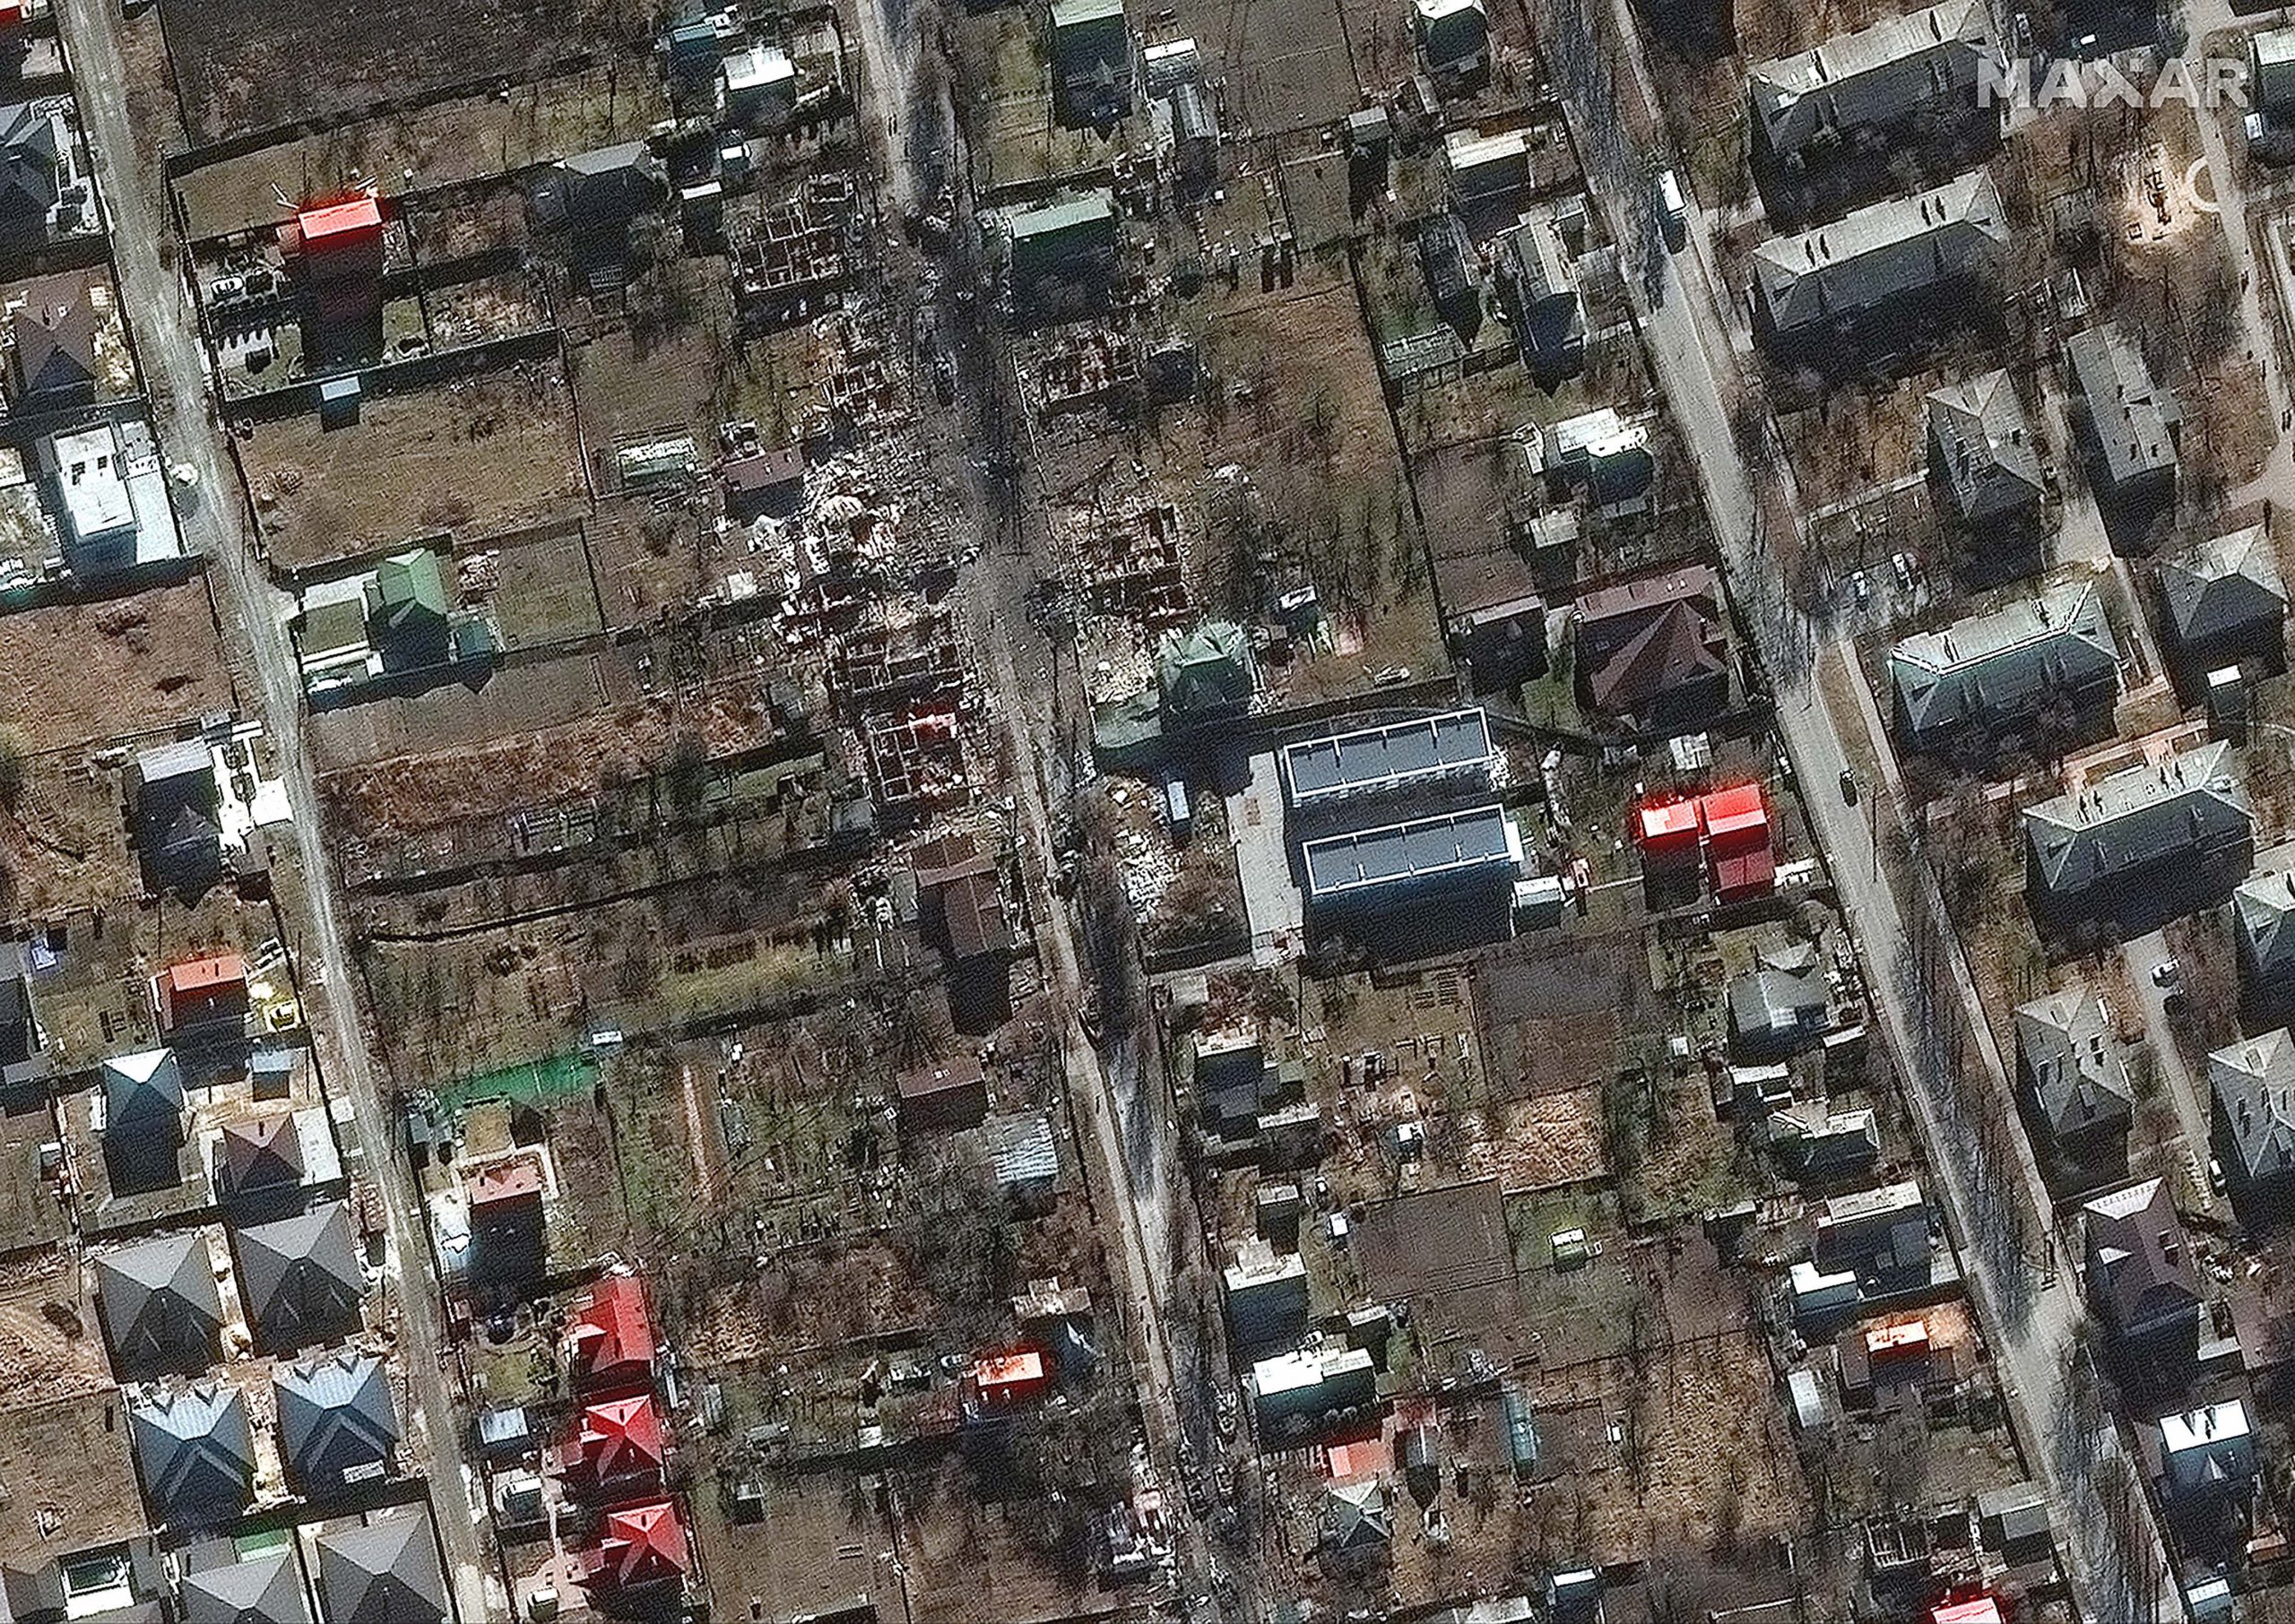 Satellite images tell Ukraine story, precision triggers concerns